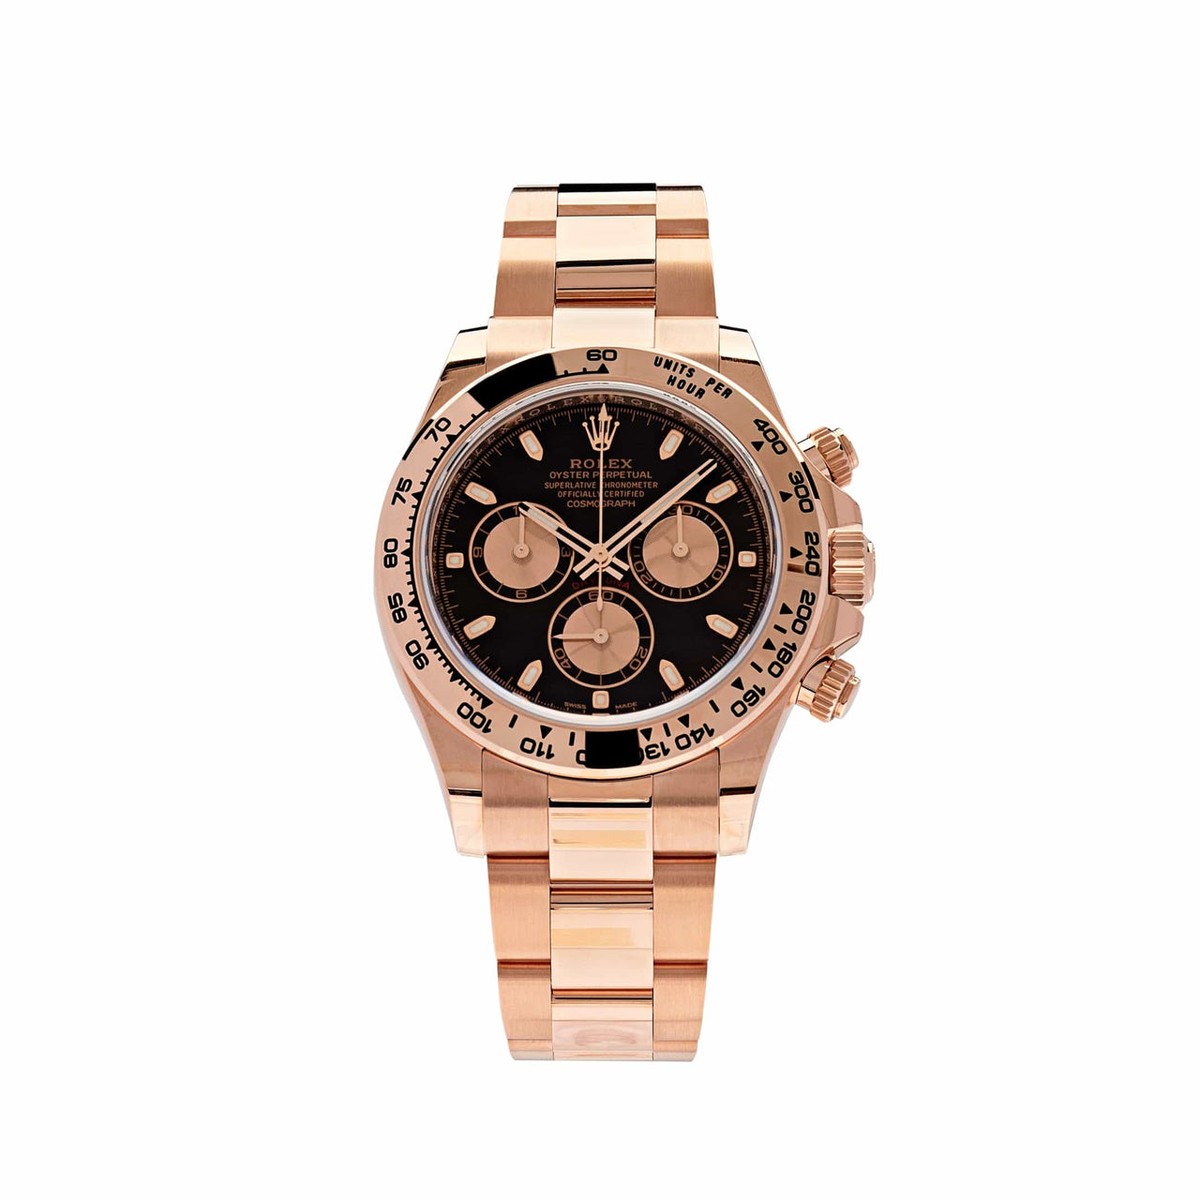 [Cherche] Rolex Daytona RÉF. 116505-0008  max 52k  Https%3A%2F%2Fwristaficionado.com%2Fcdn%2Fshop%2Ffiles%2Frolex-daytona-rose-gold-black-pink-dial-116505-2023-rolex-40269465616628_1280x